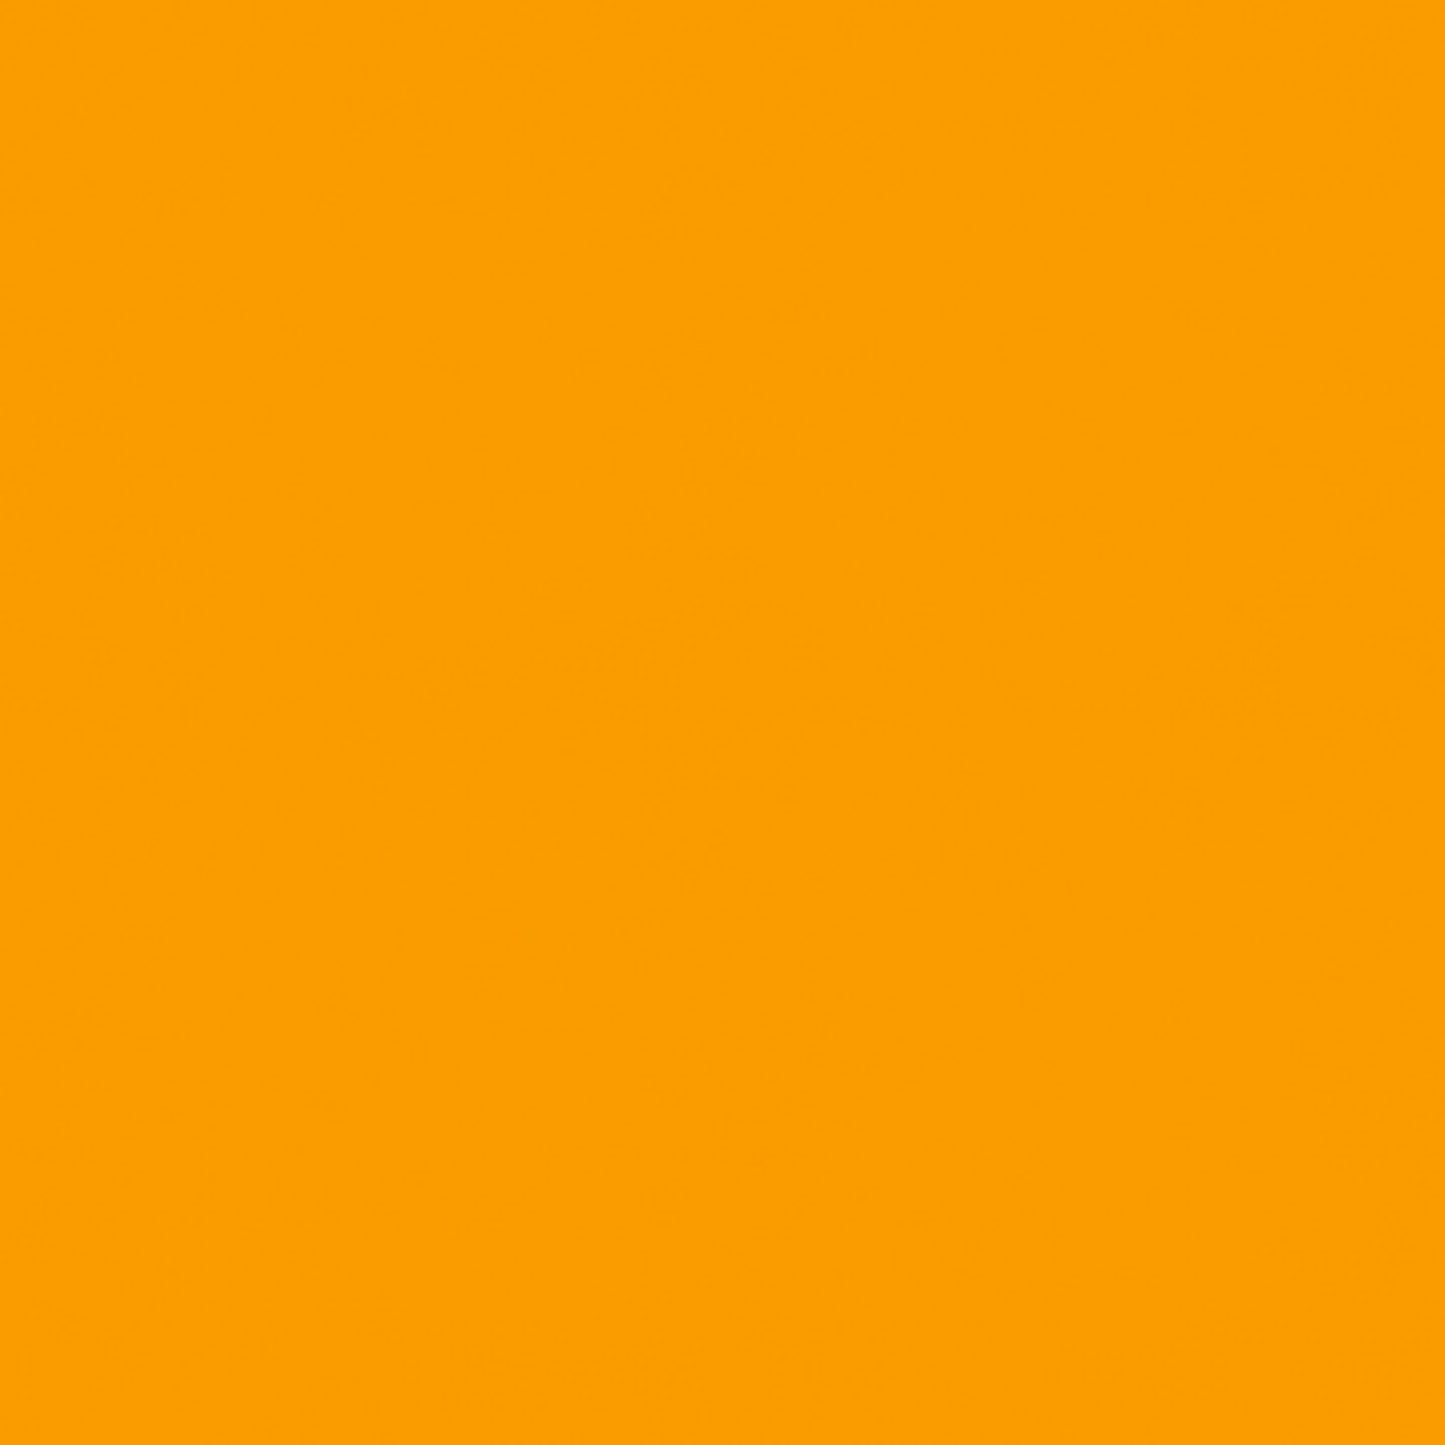 Creative Company Plus Color Acrilic Paint, Sole giallo, 60 ml